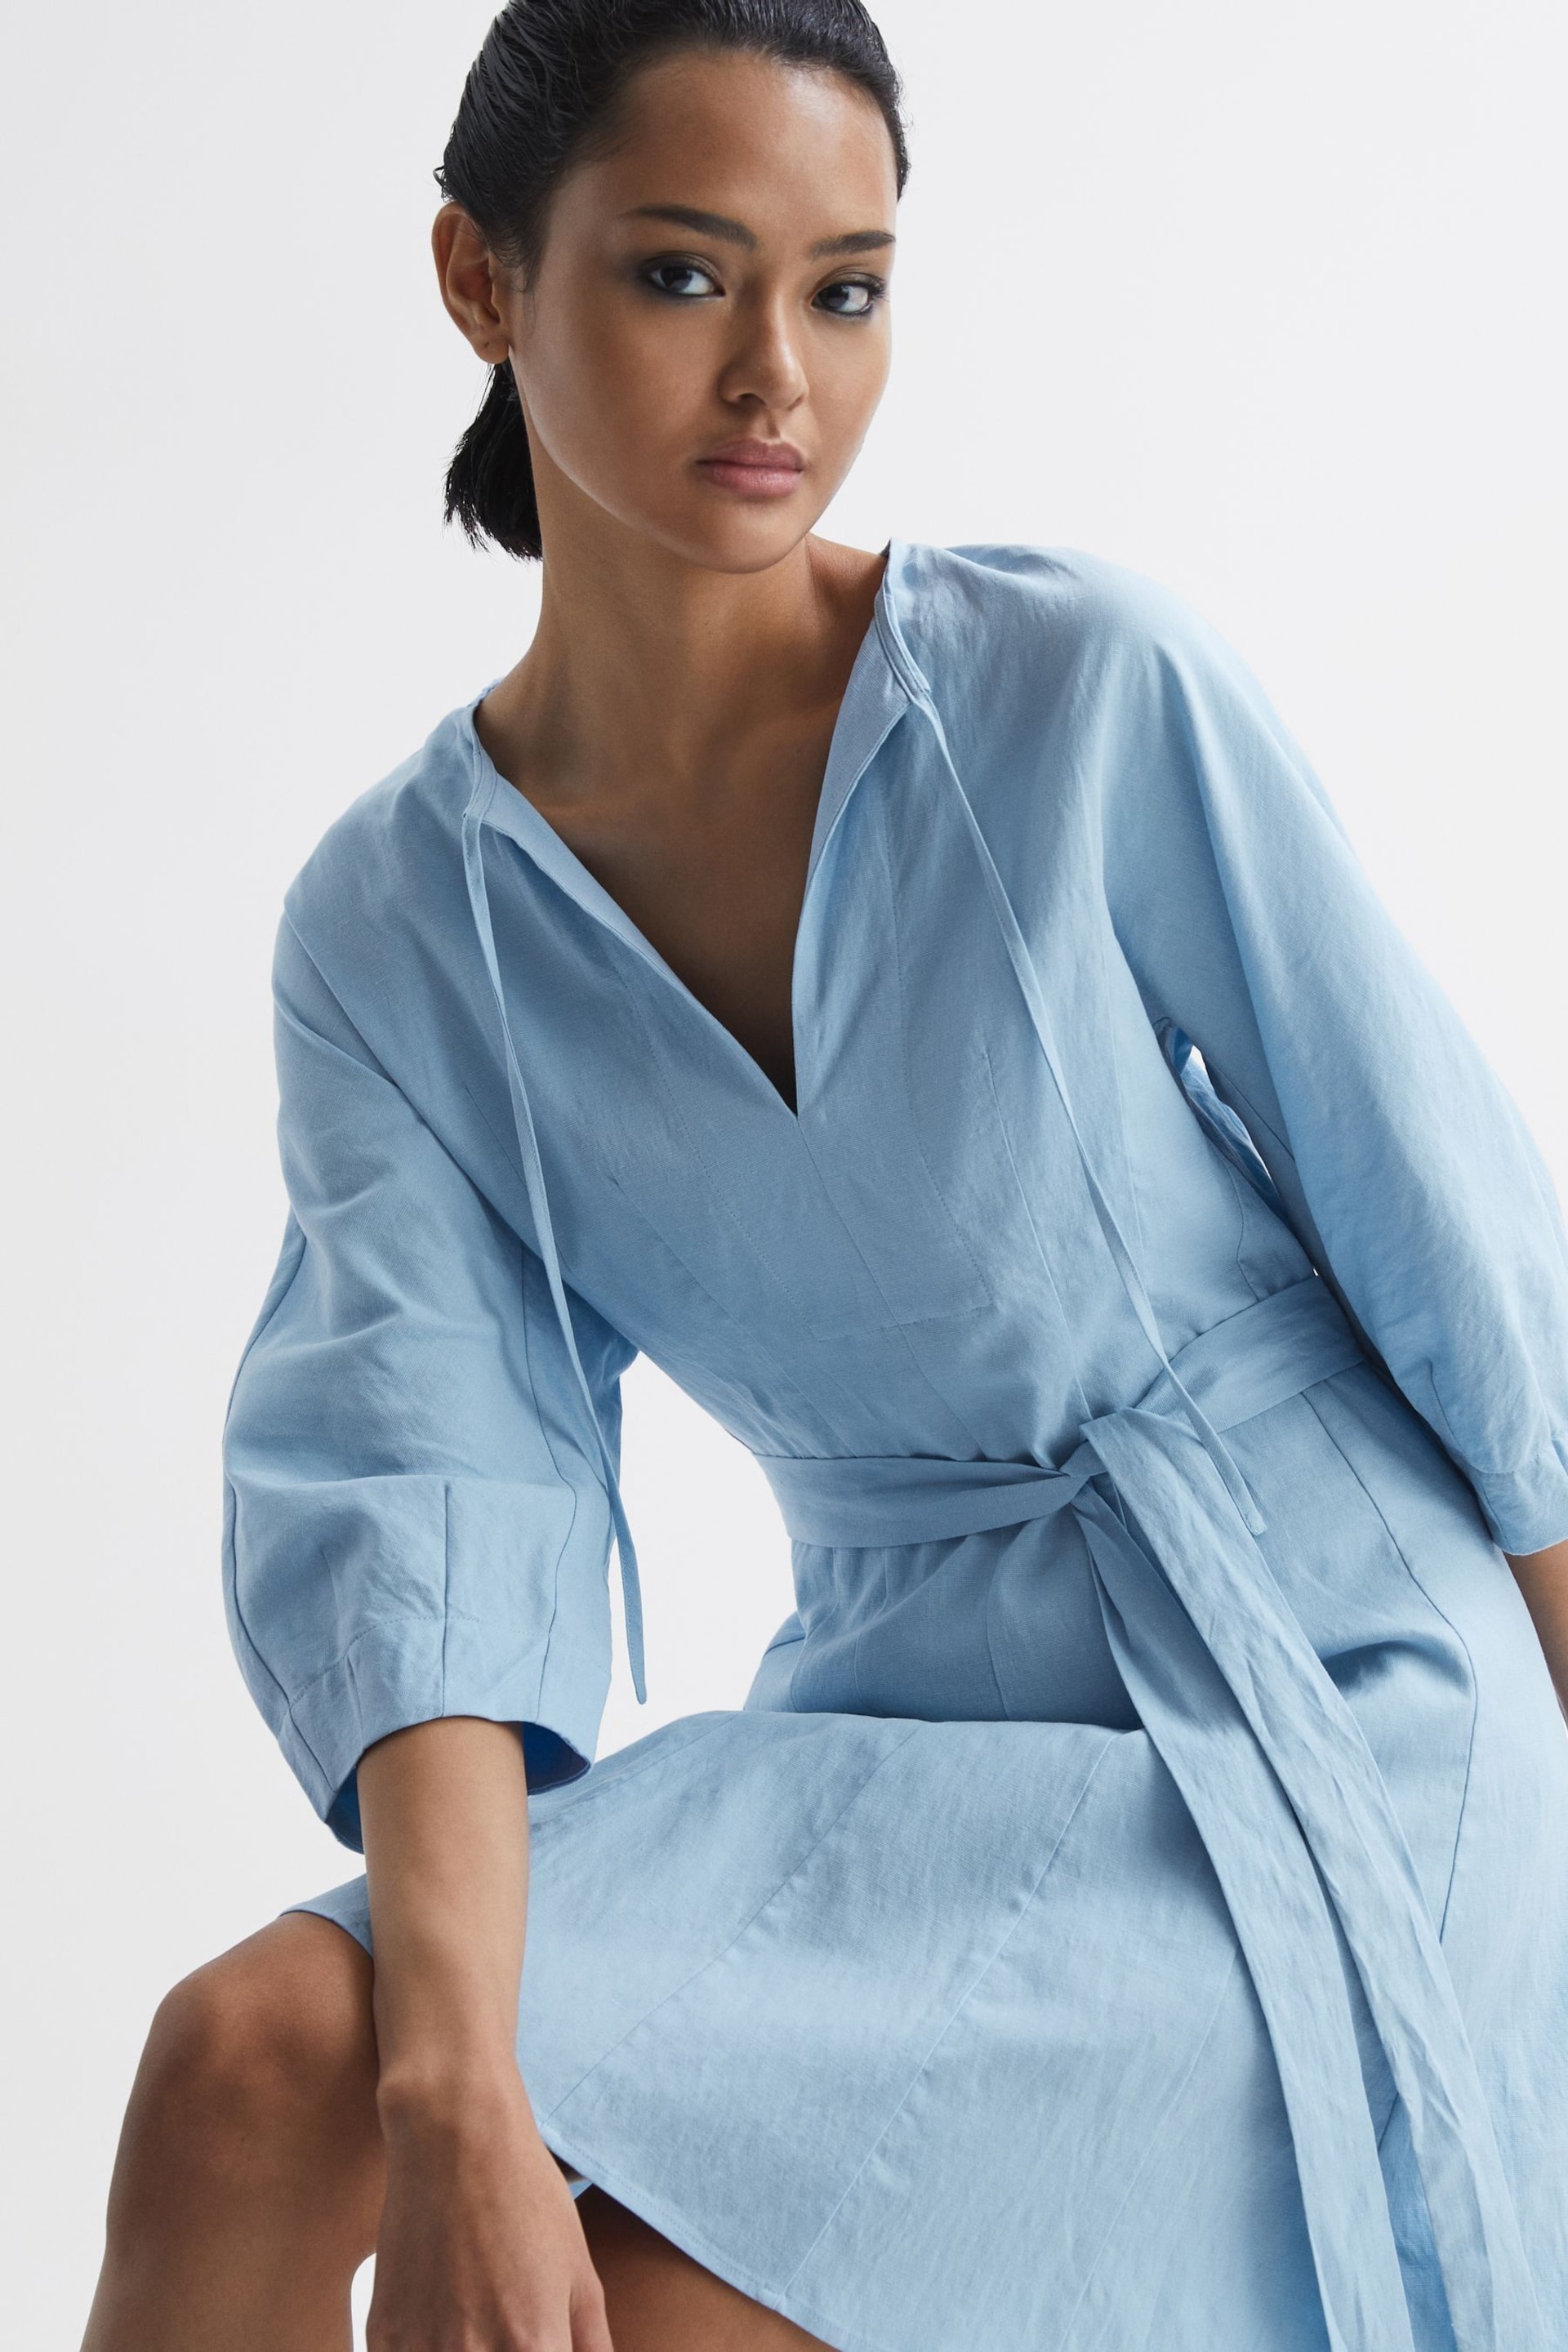 Reiss Blue Freida Relaxed Fit Self-Tie Mini Dress - Image 1 of 6